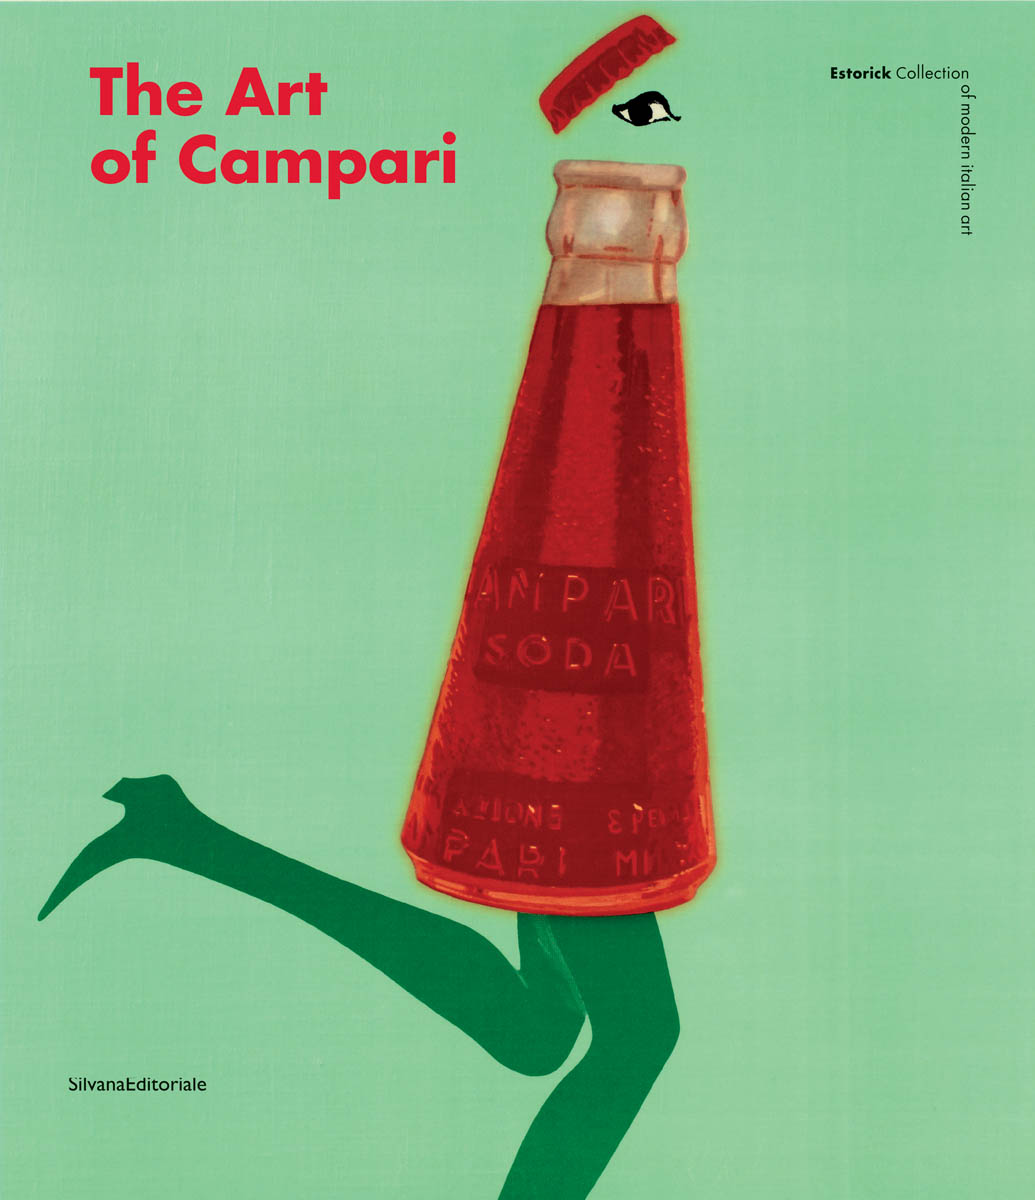 Art of Campari, the cover